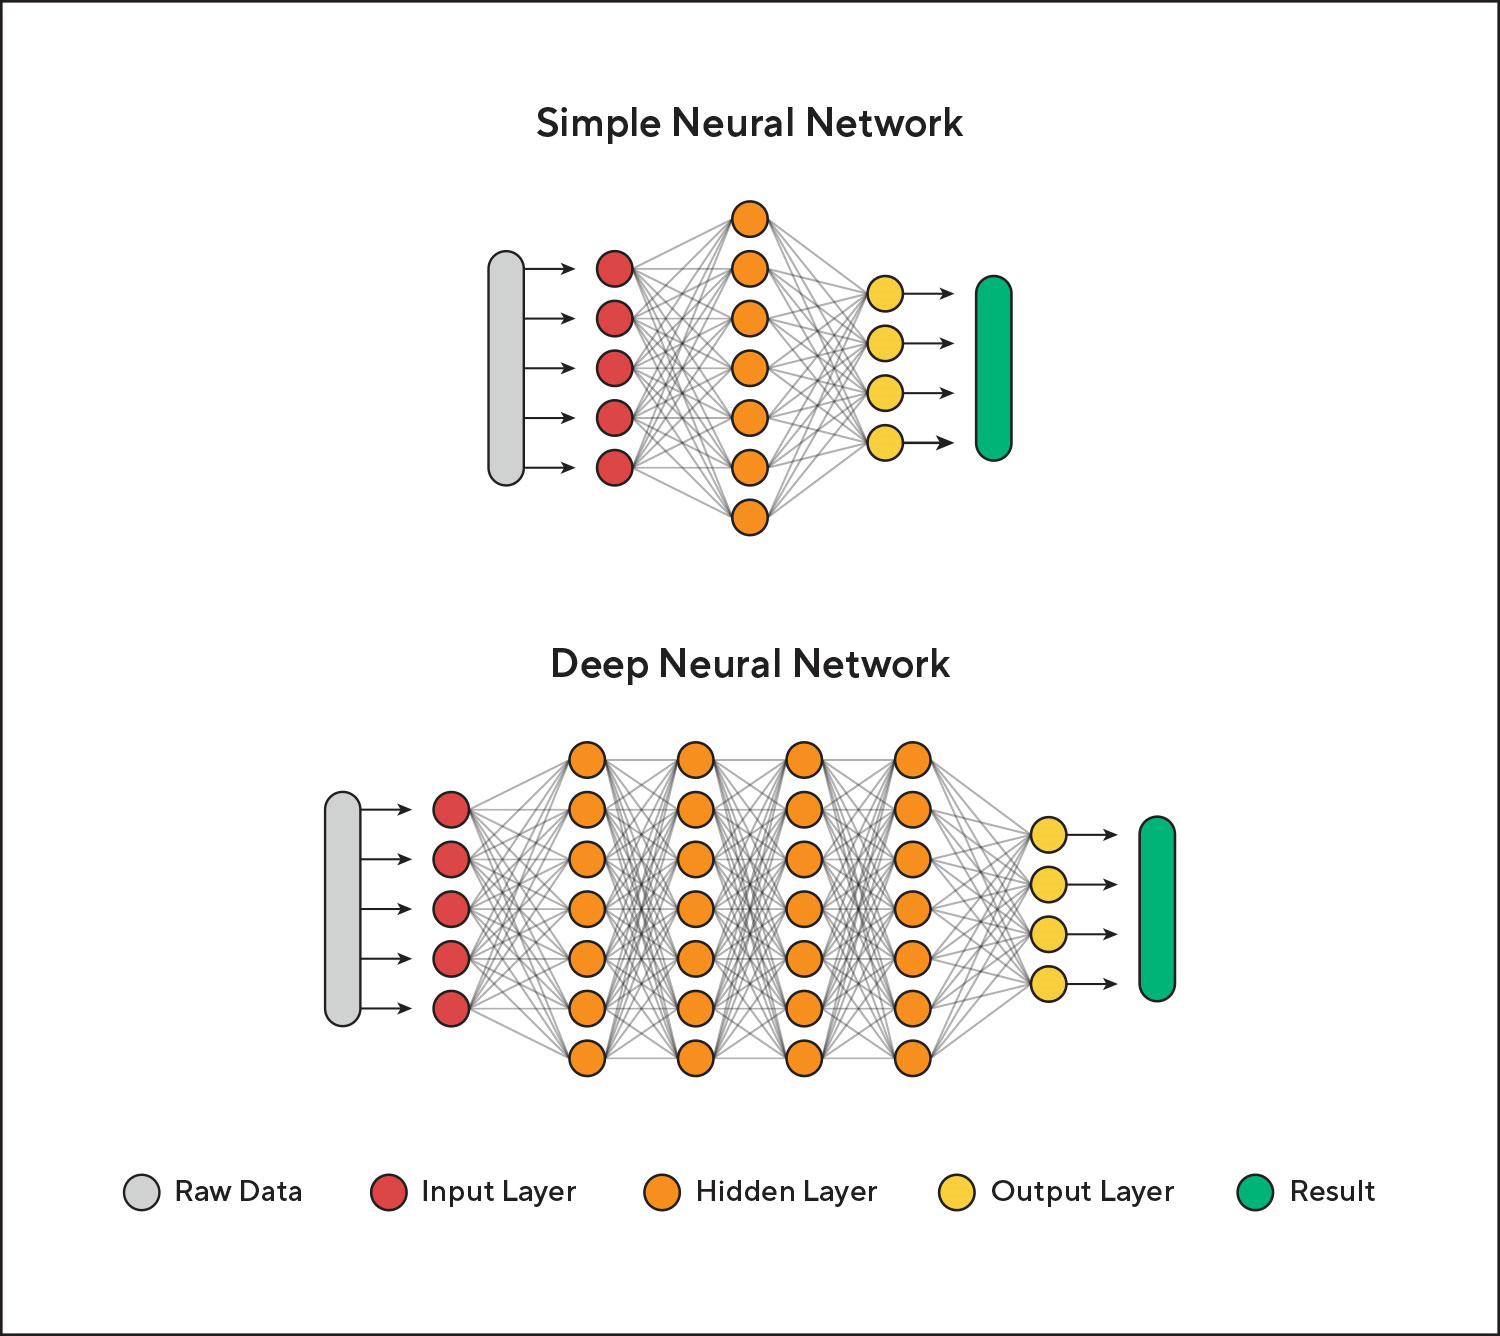 Simple Neural Network vs. Deep Neural Network